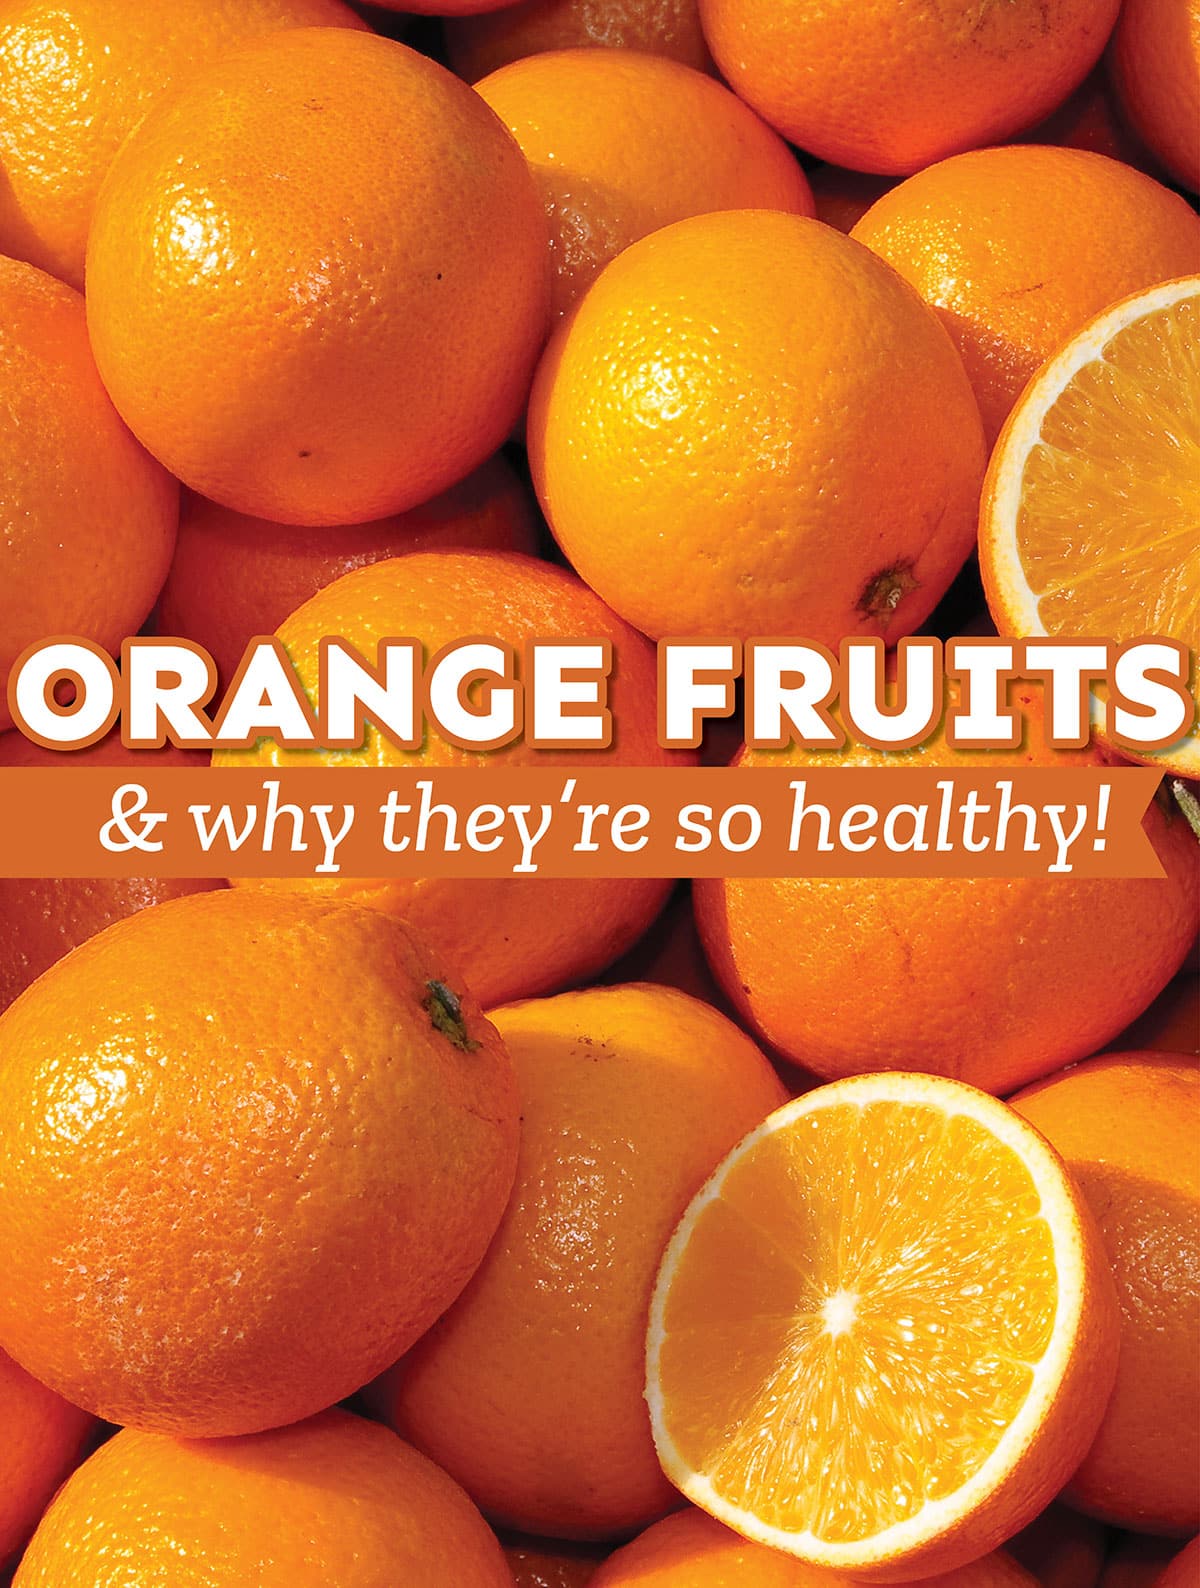 Collage that says "orange fruits".